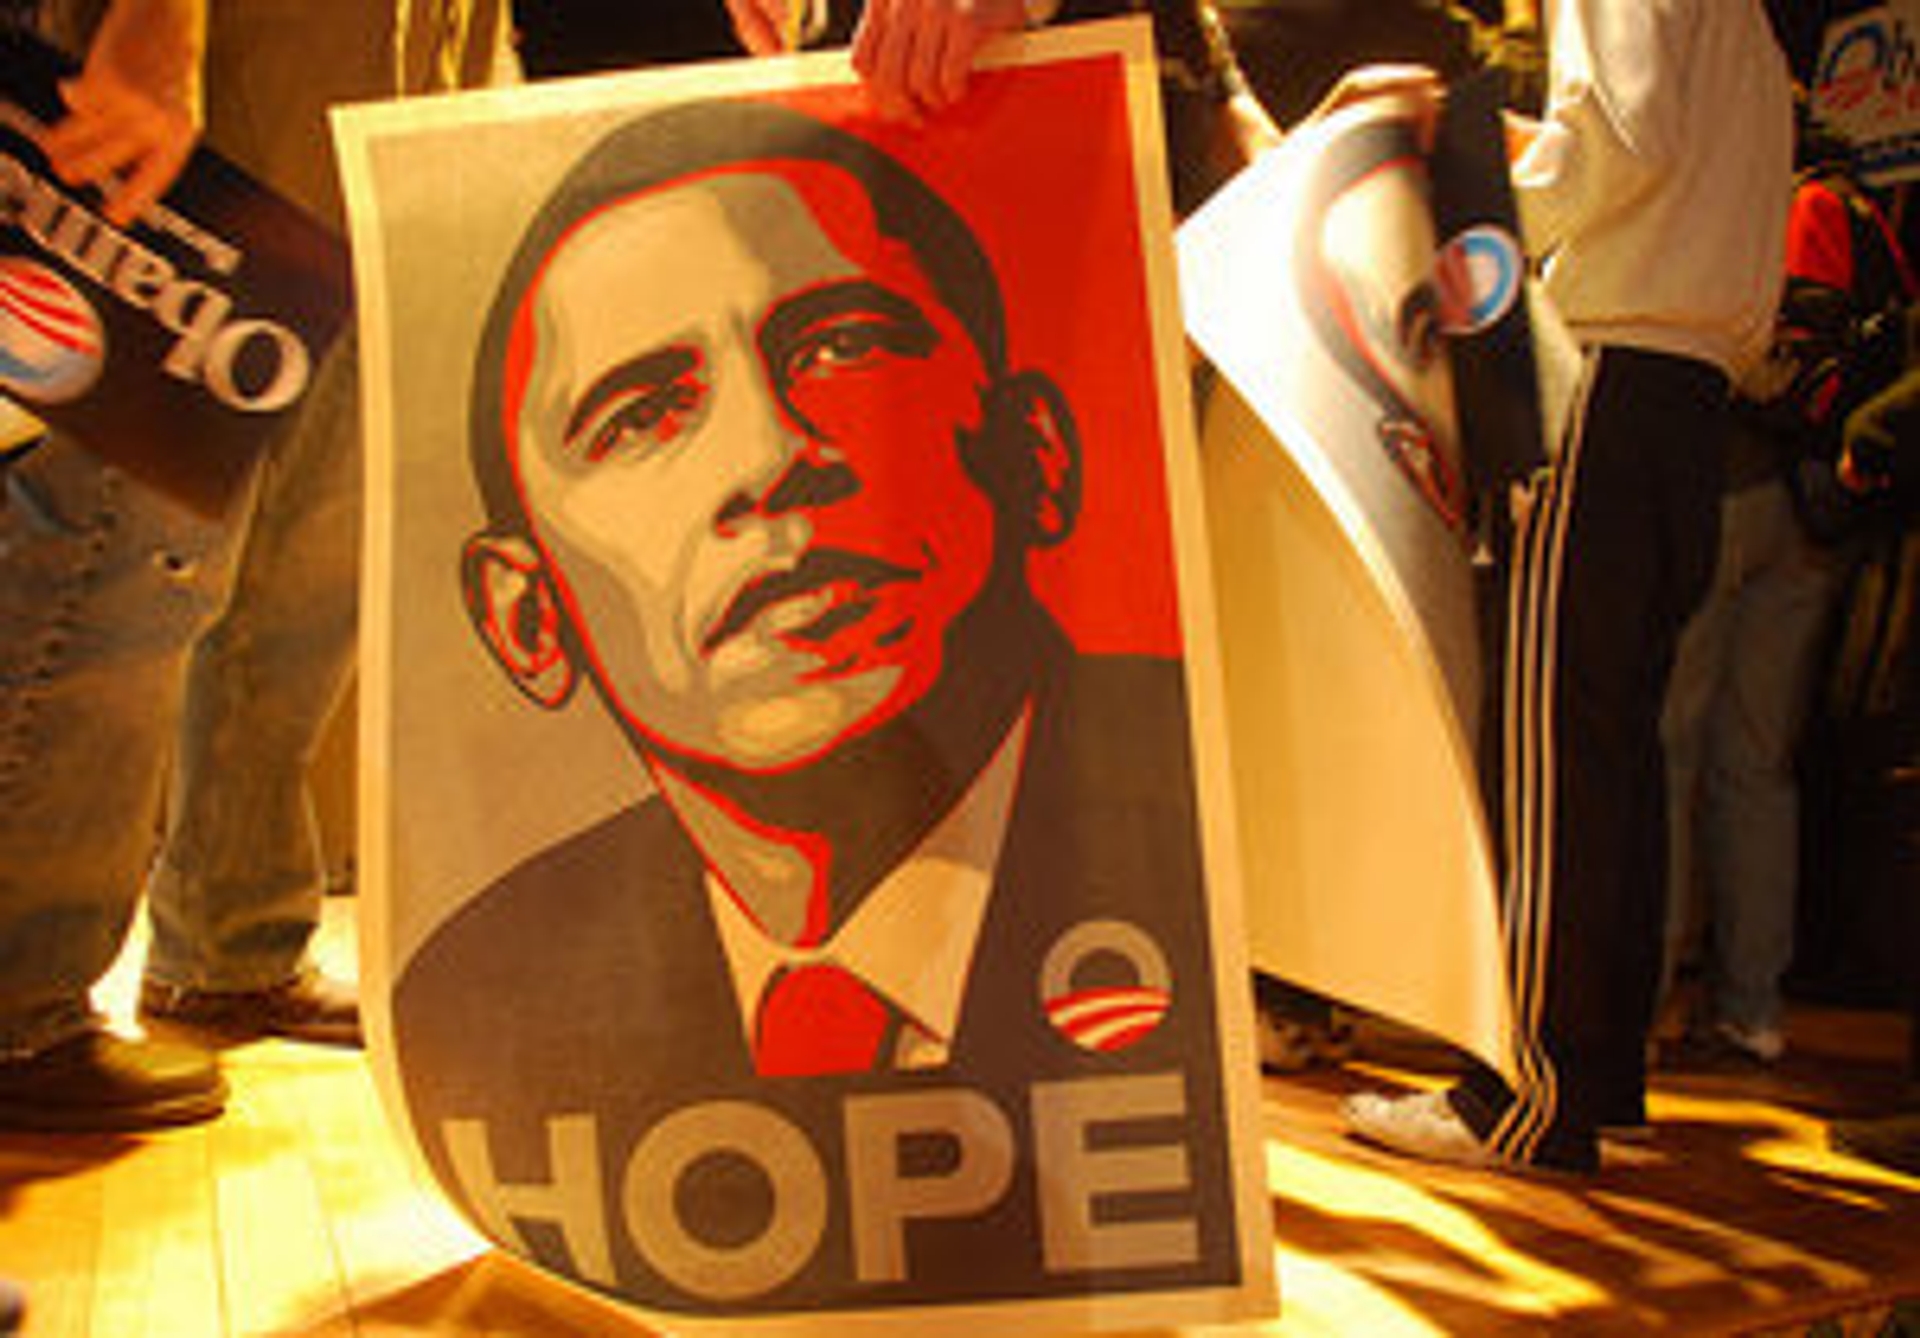 RTEmagicC_obama-hope-posters_01.jpg